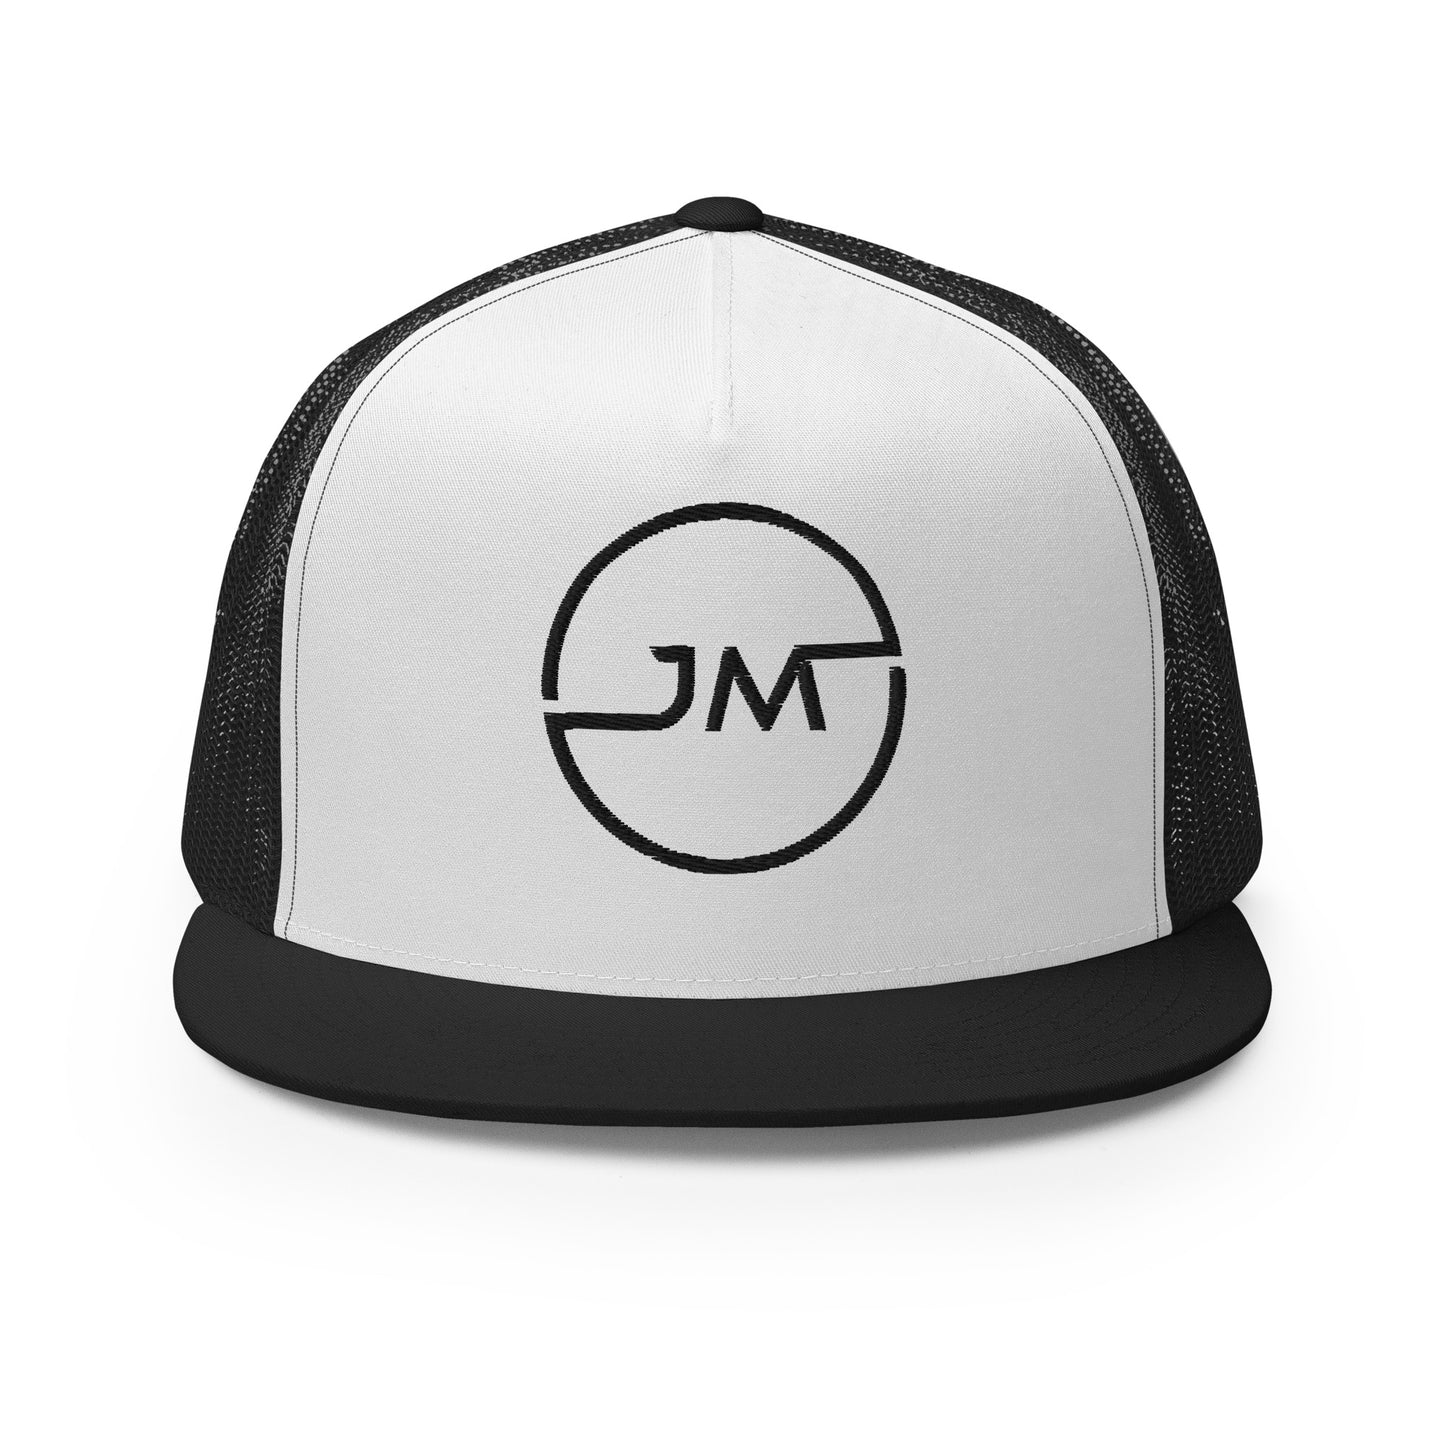 Jordan McKenzie "JM" Trucker Cap